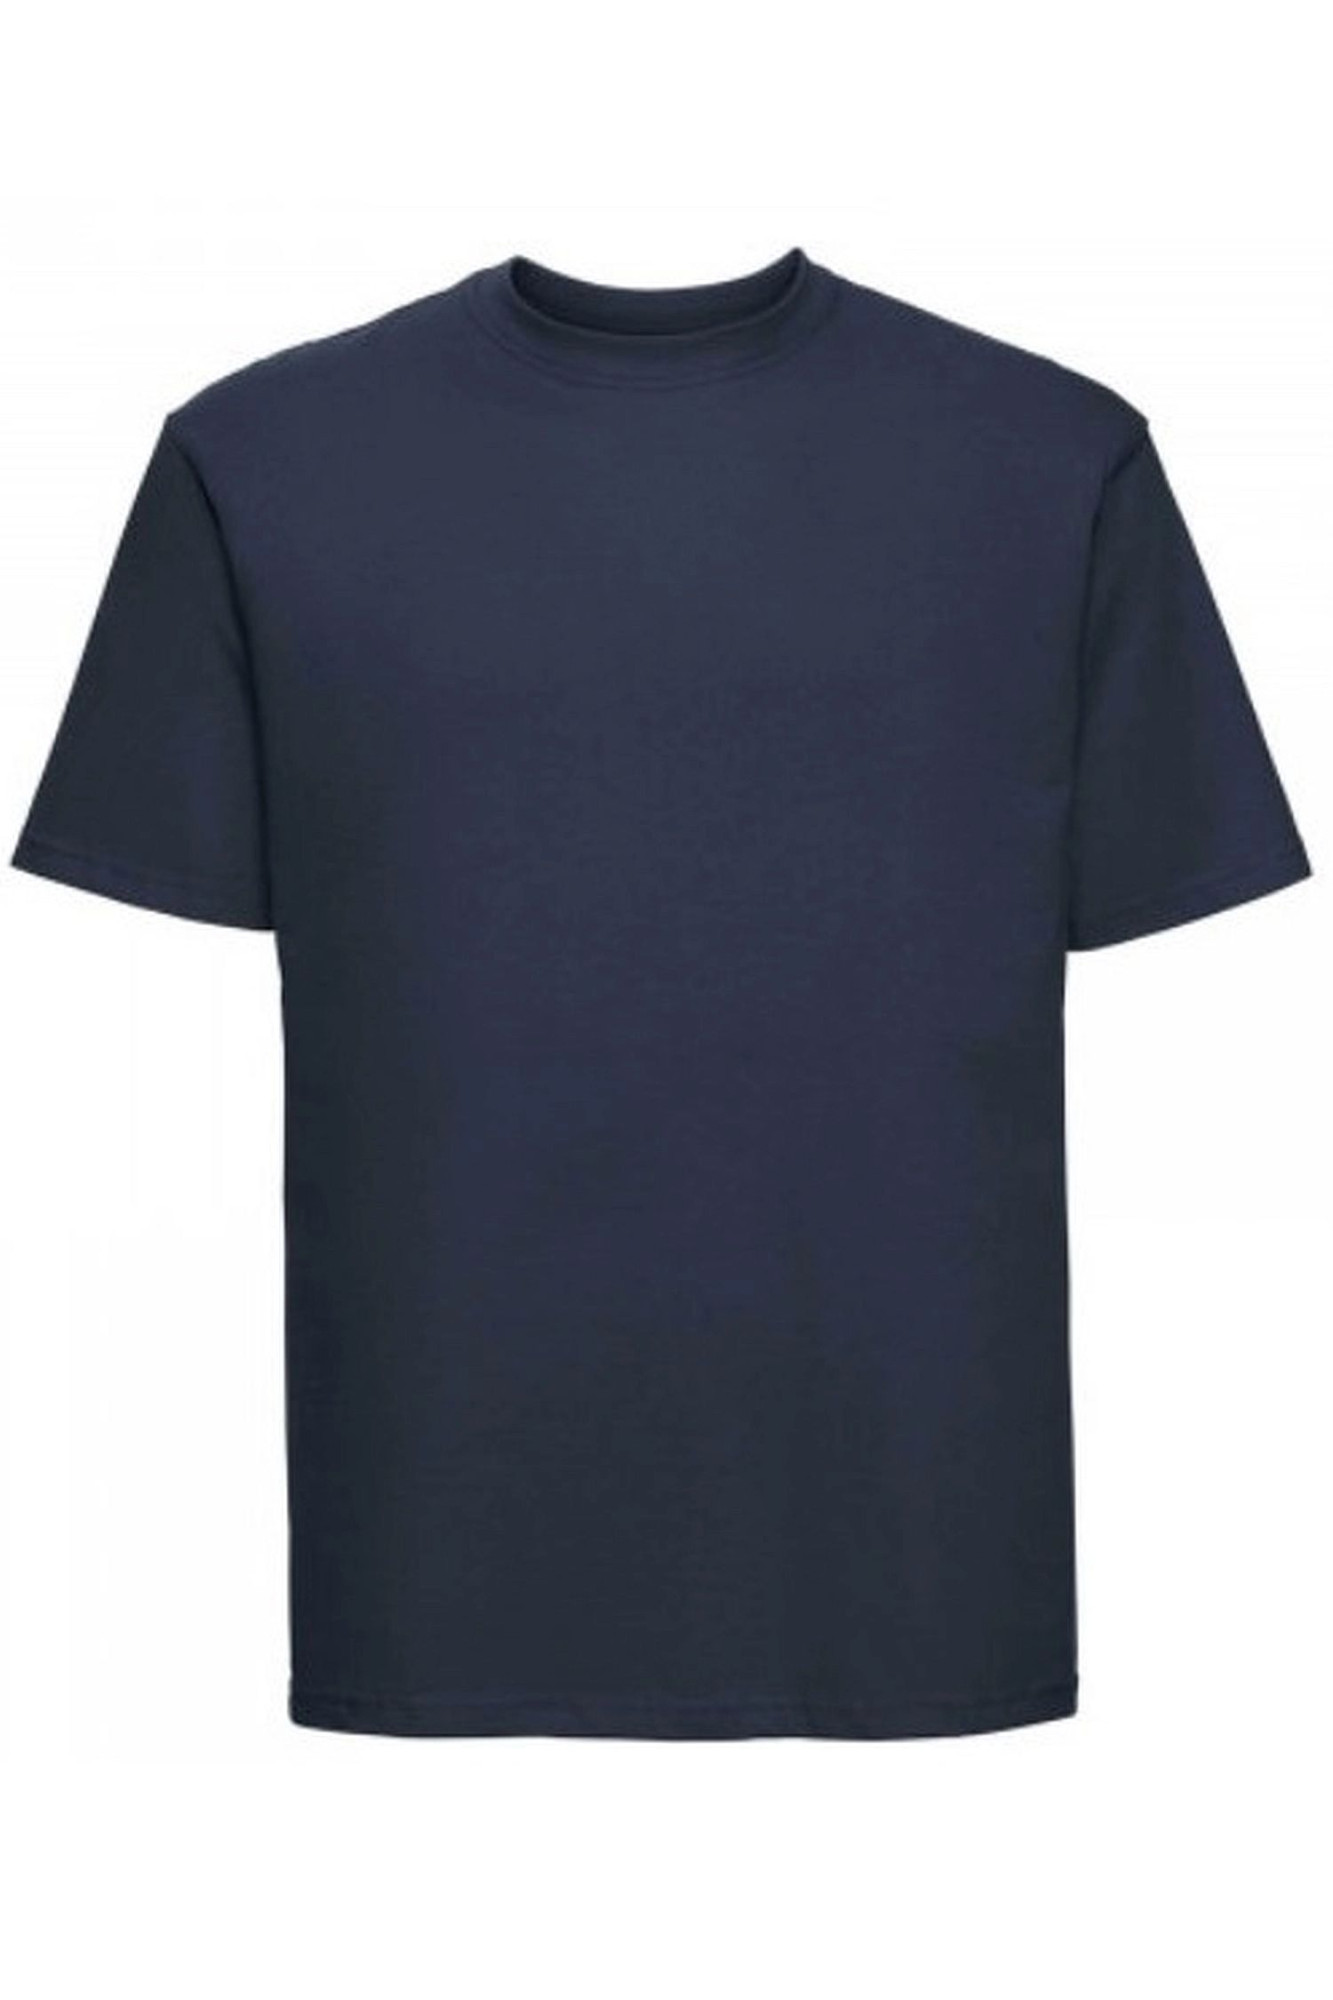 Pánské tričko 002 dark blue - NOVITI tmavě modrá M